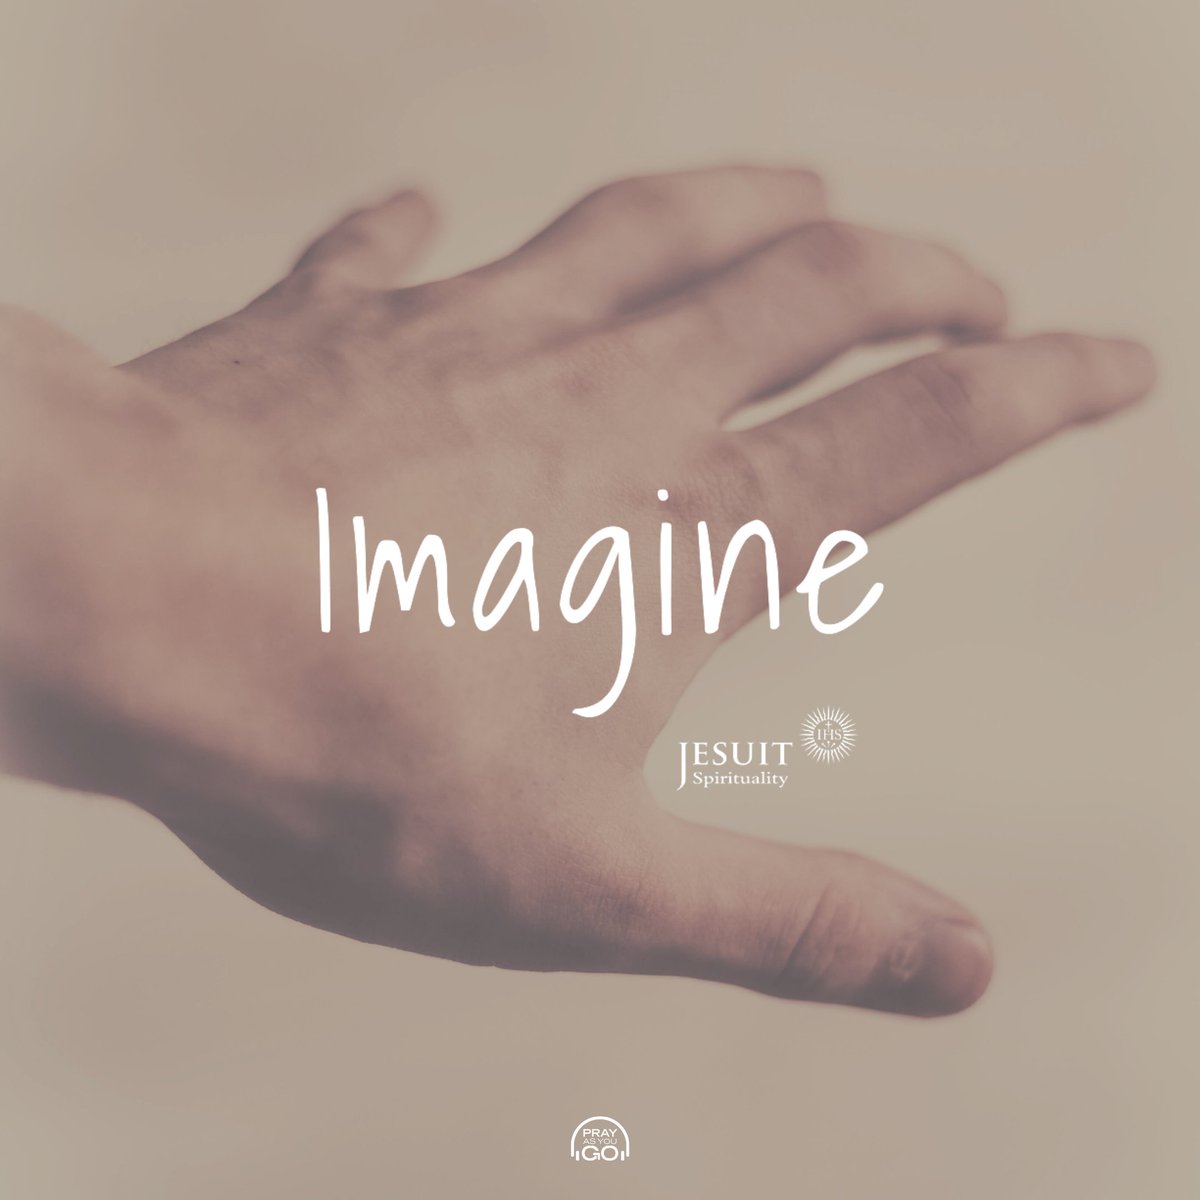 Imagine: A Guide to Jesuit Prayer